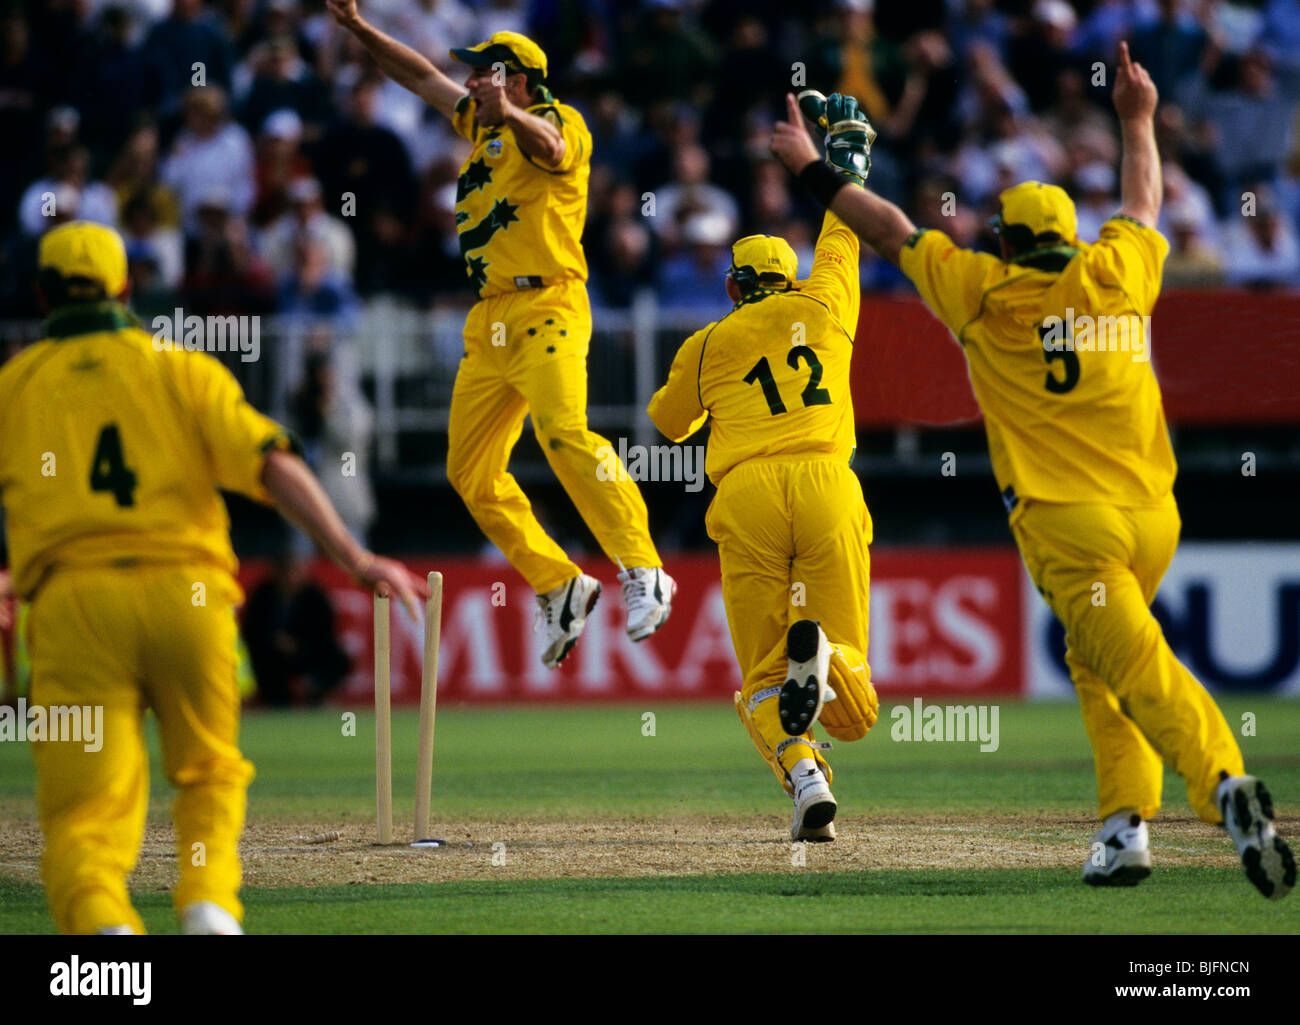 Cricketers celebrating Stock Photo